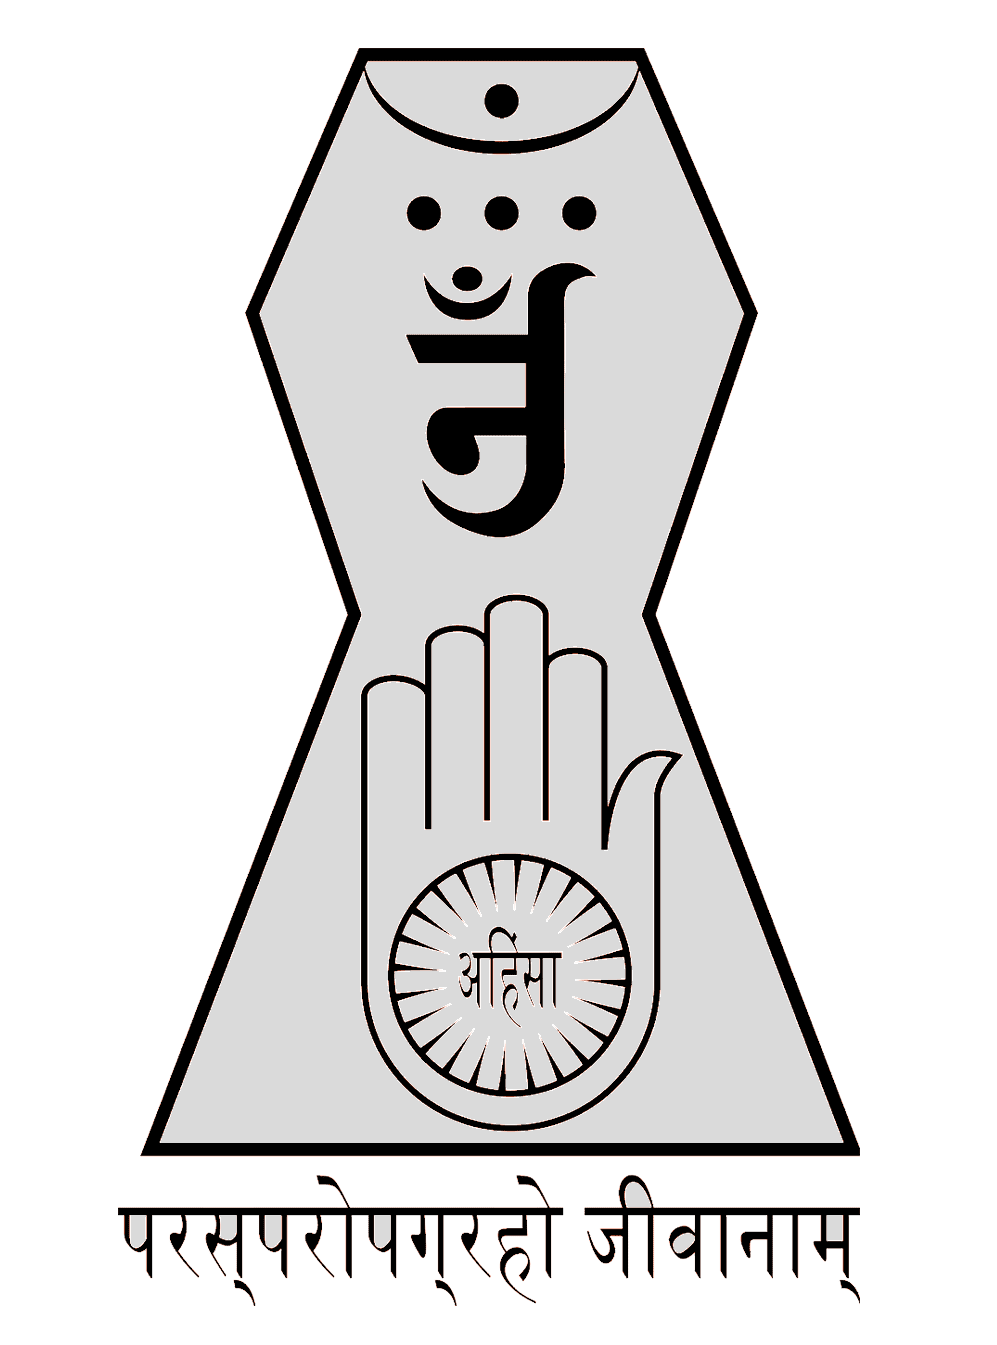 How to draw jain symbol easy Emblem | mahavir jayanti jain symbol | jainism  symbol - YouTube